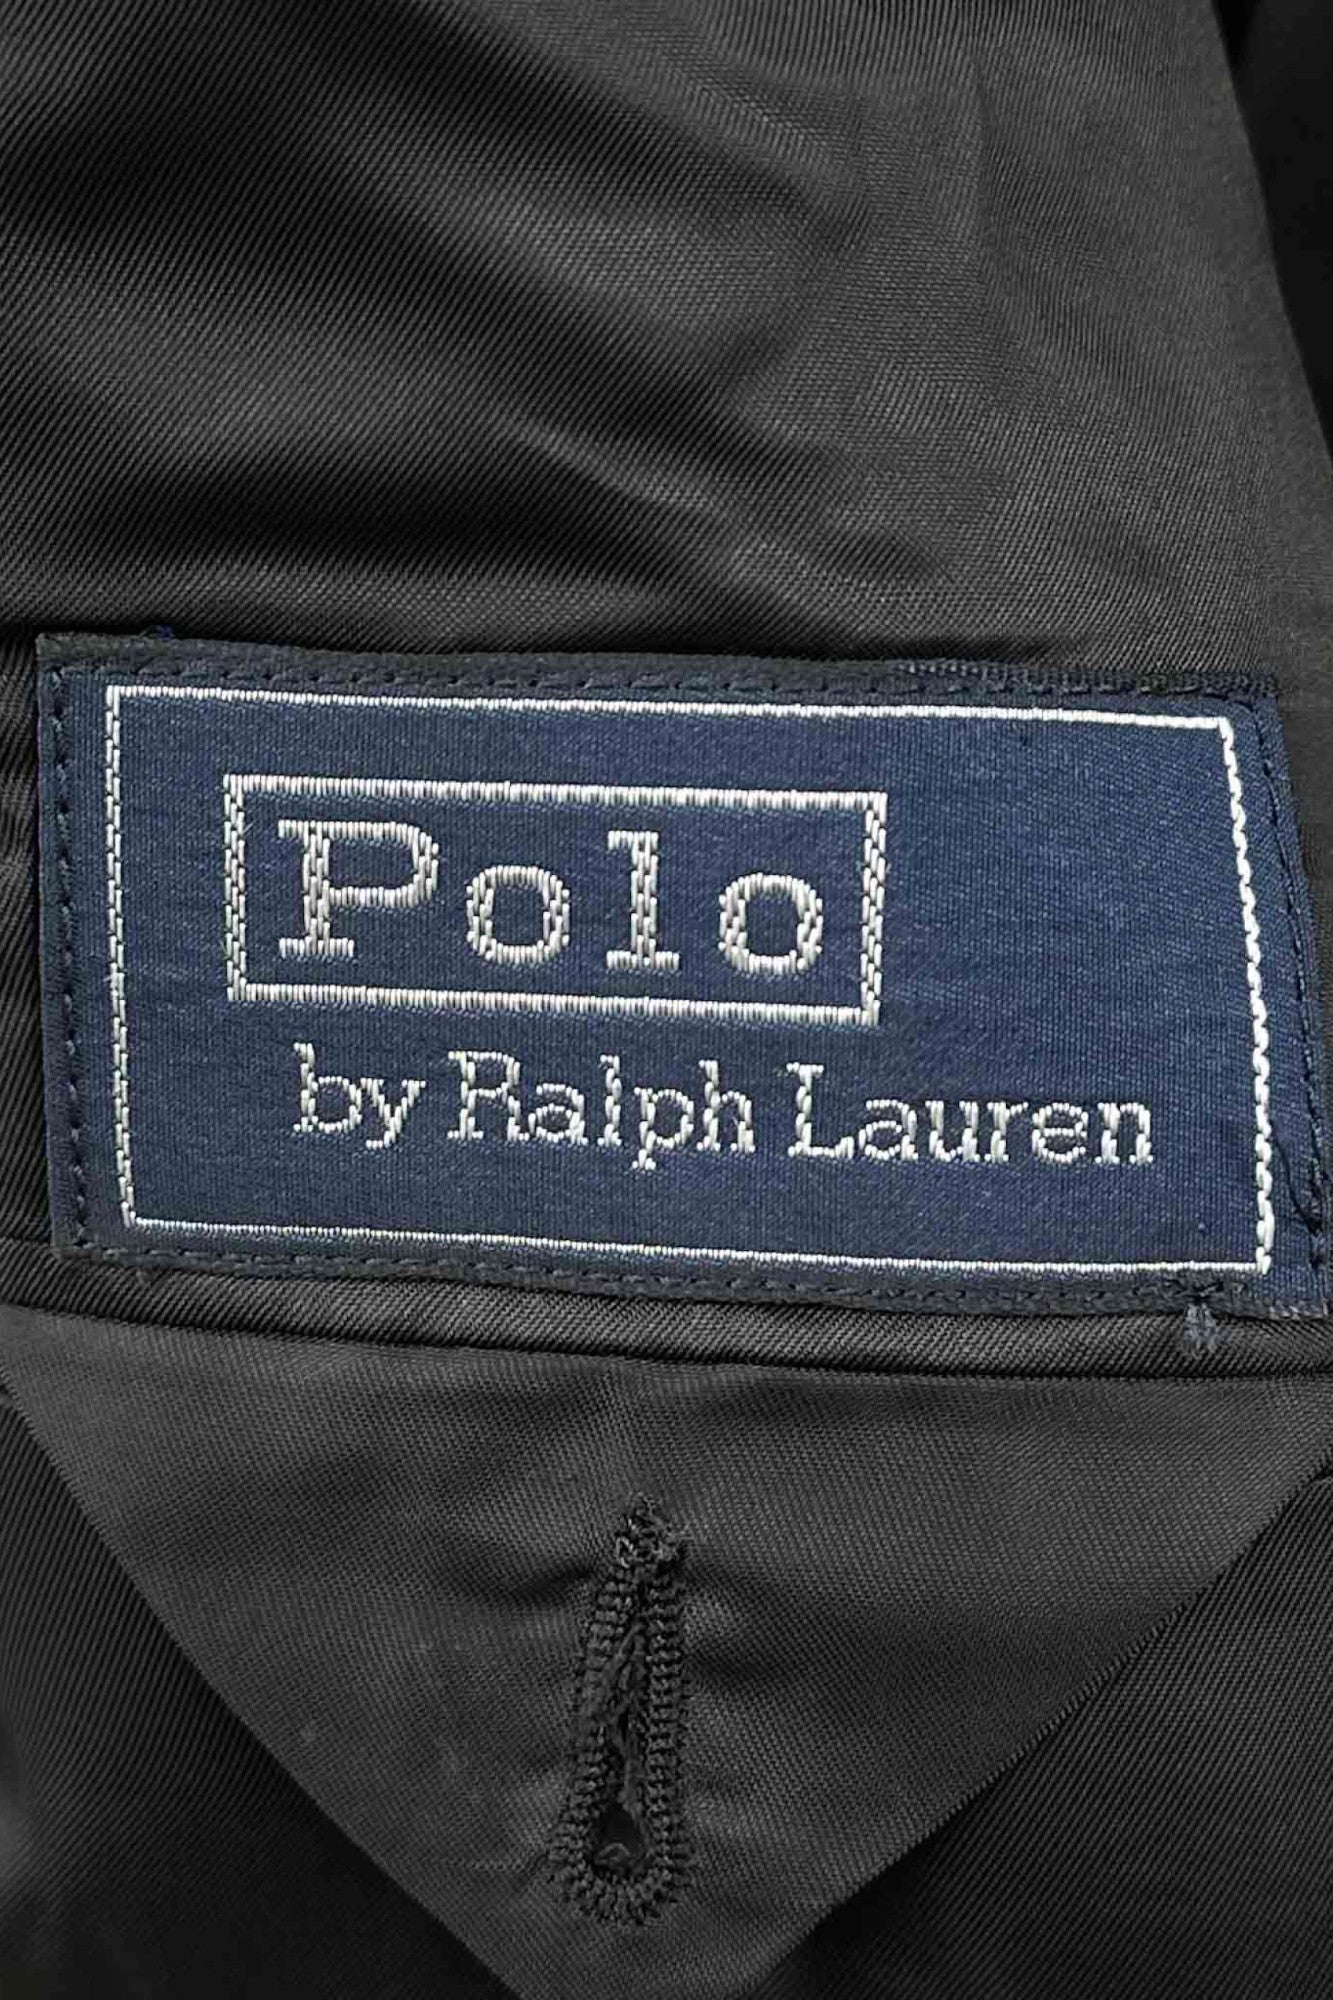 Polo by Ralph Lauren jacket